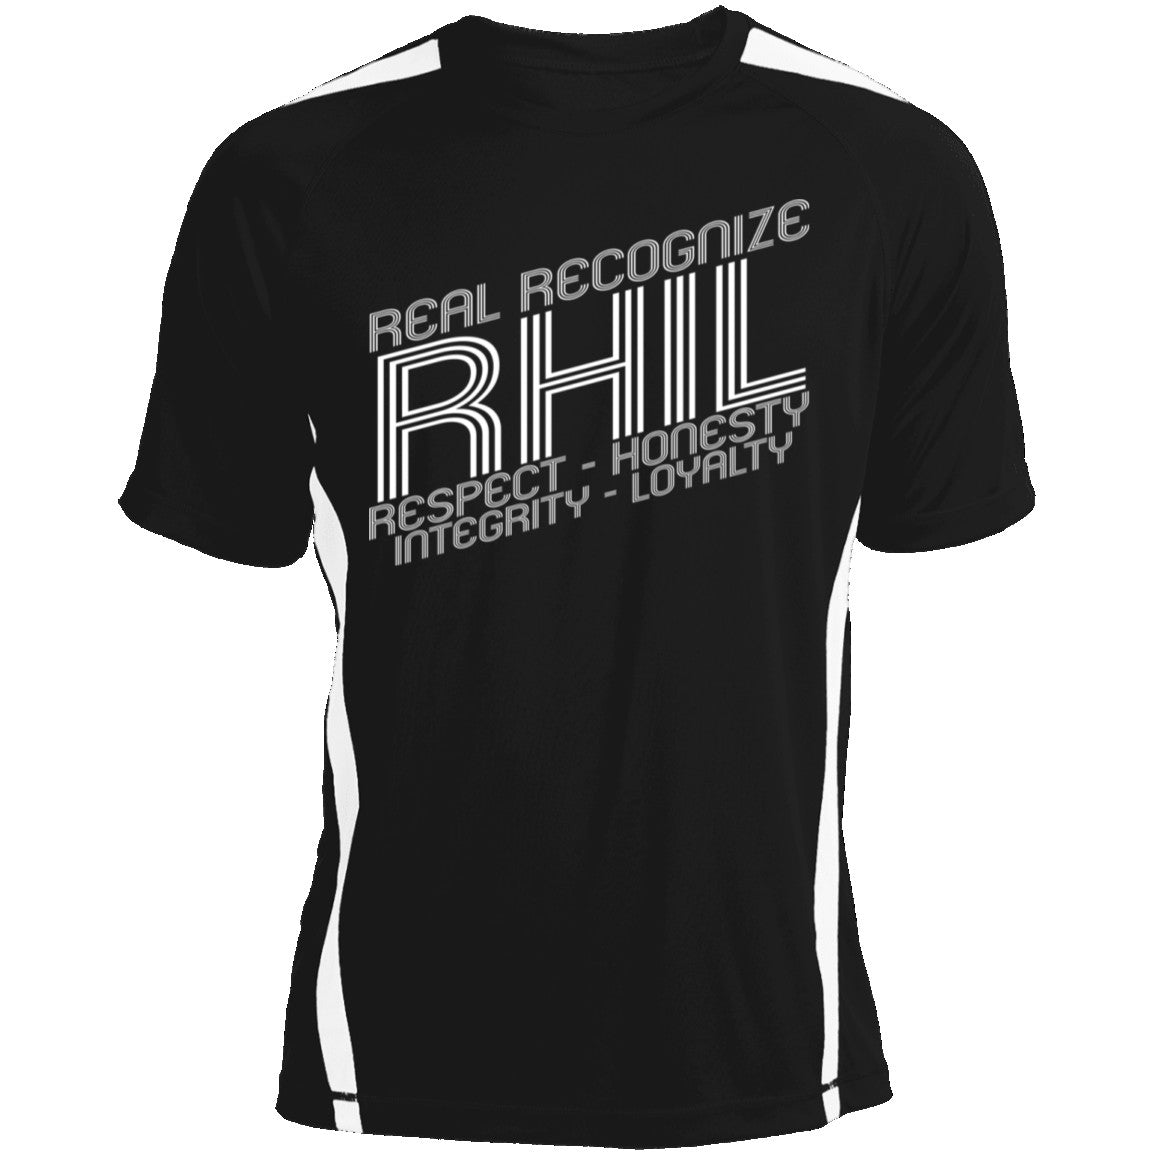 Real Recognize RHIL (Respect, Honesty, Integrity, Loyalty) Colorblock Dry Zone Crew CustomCat